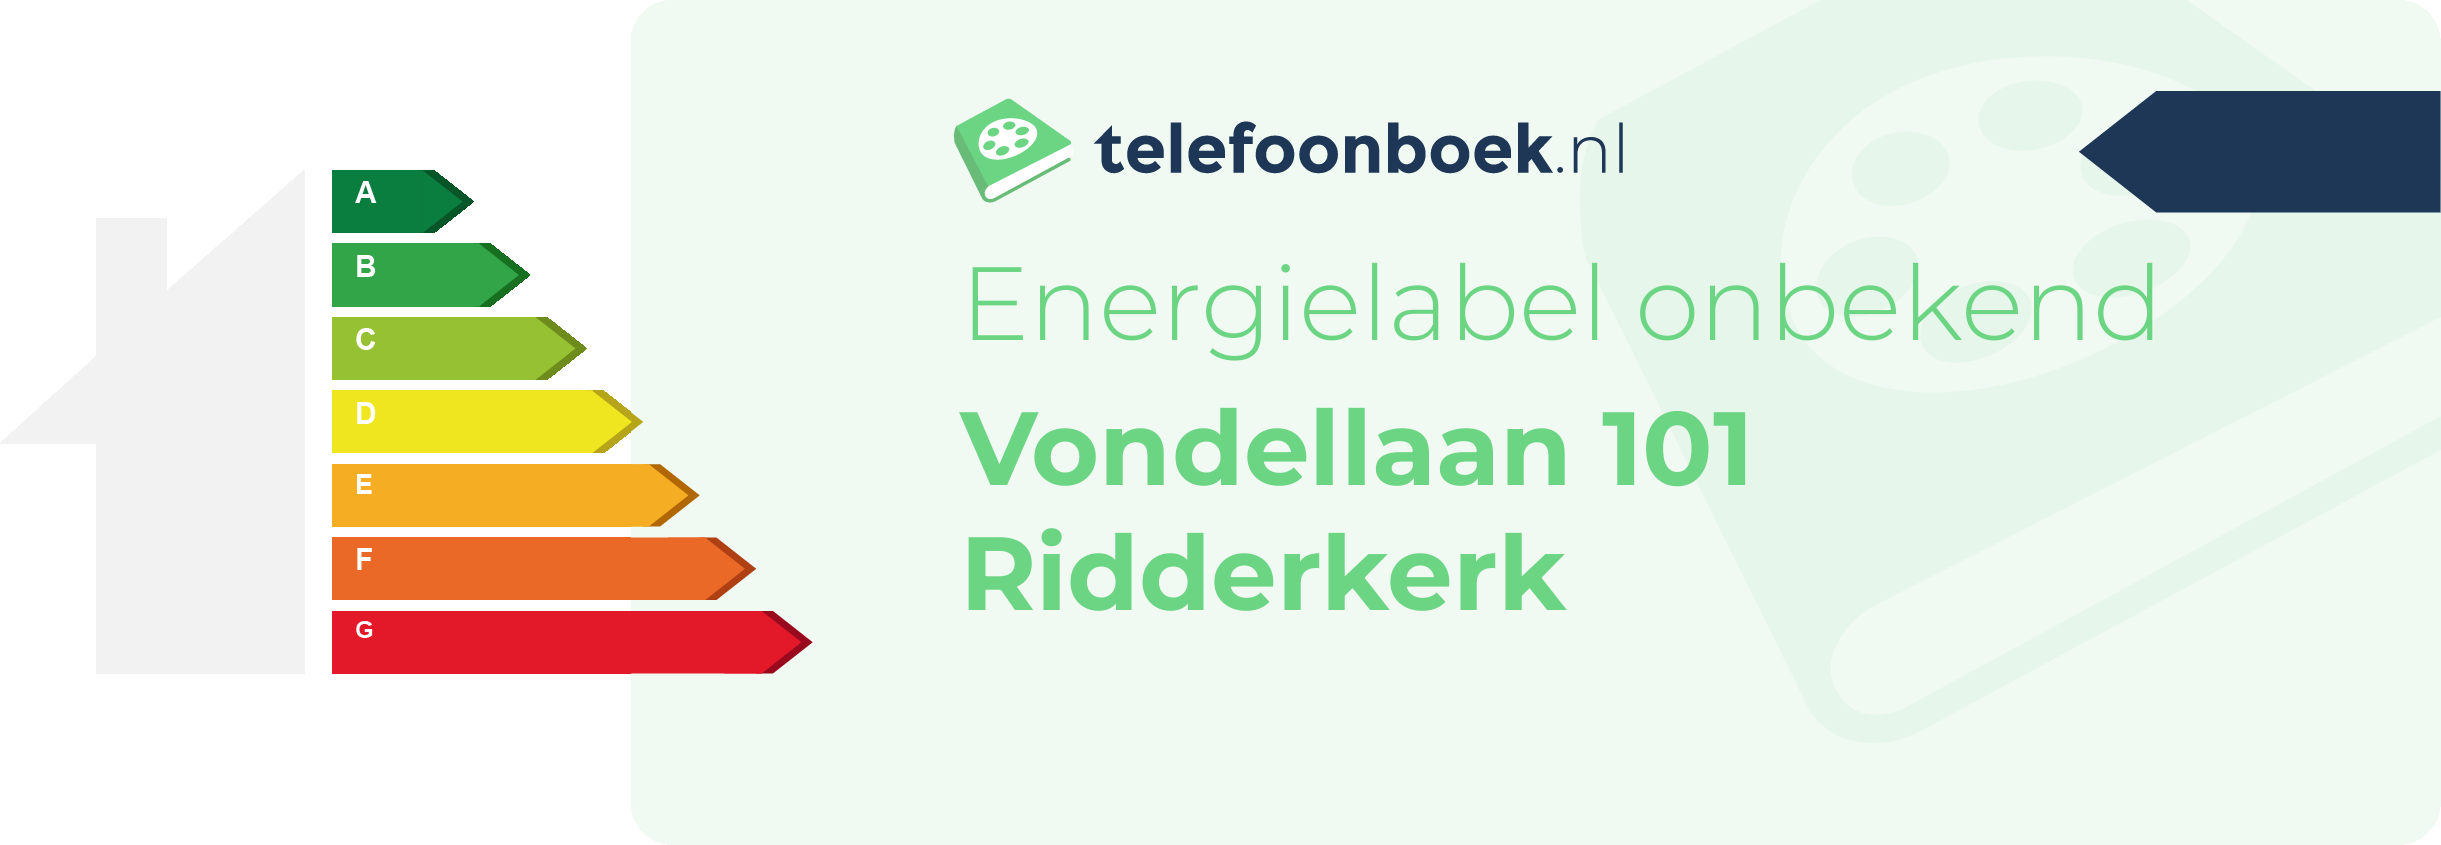 Energielabel Vondellaan 101 Ridderkerk